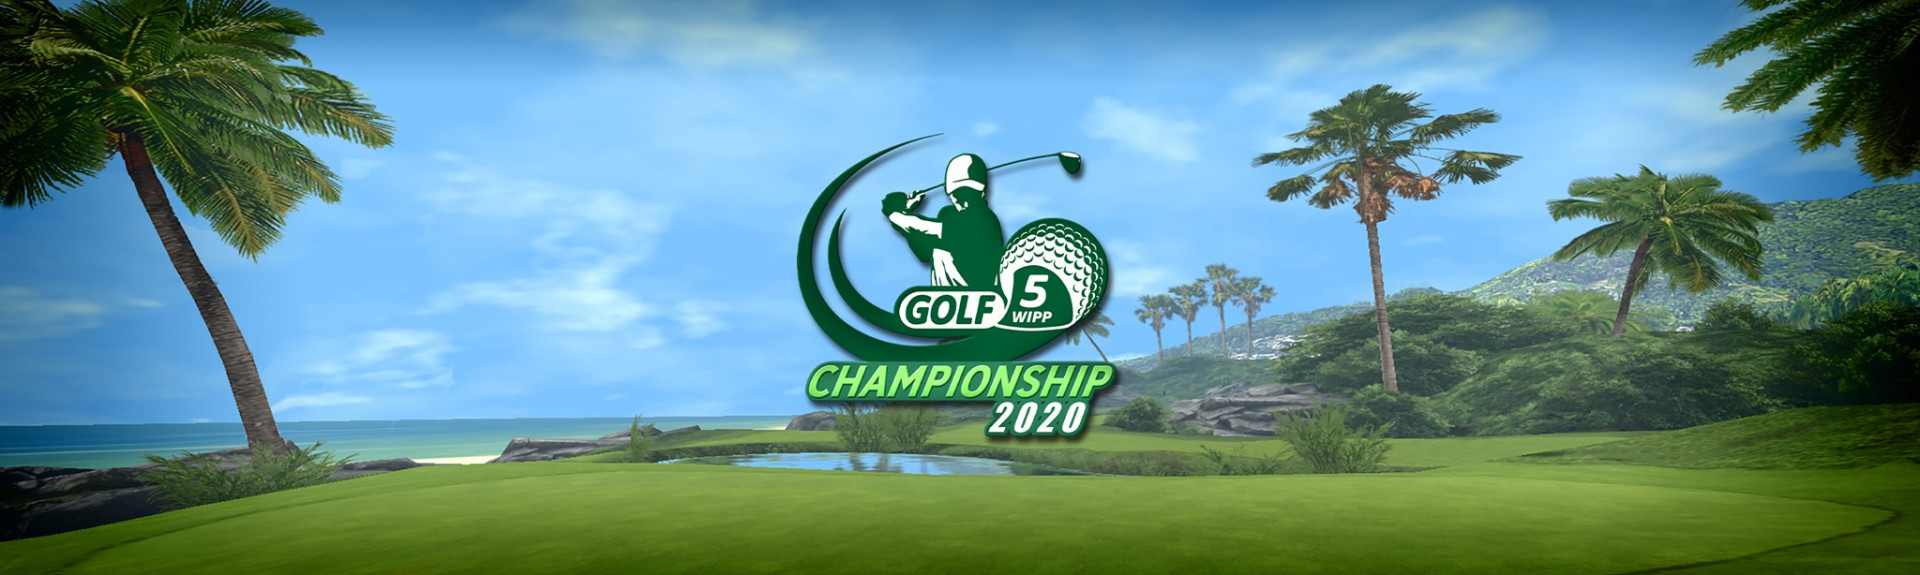 Golf 5 WIPP CHAMPIONSHIP 2020